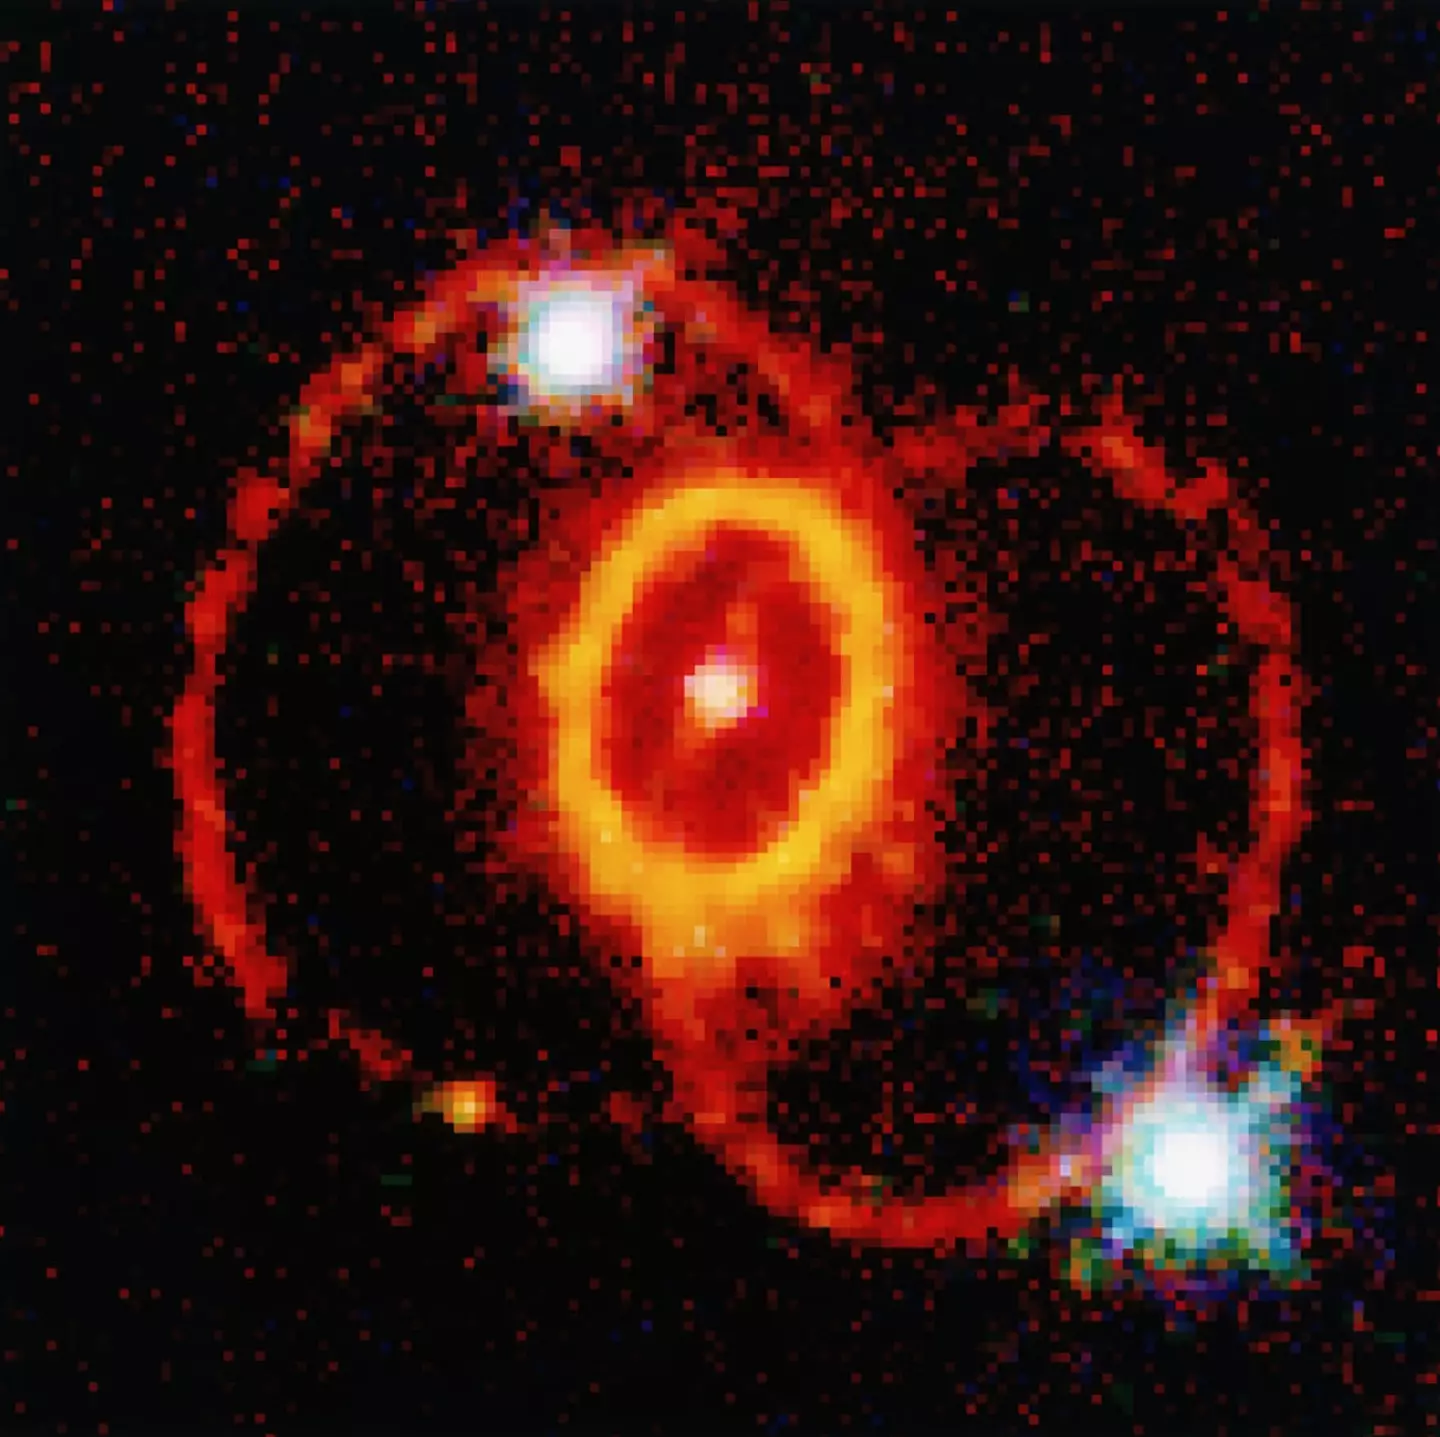 Supernova 1987A took place in 1987.